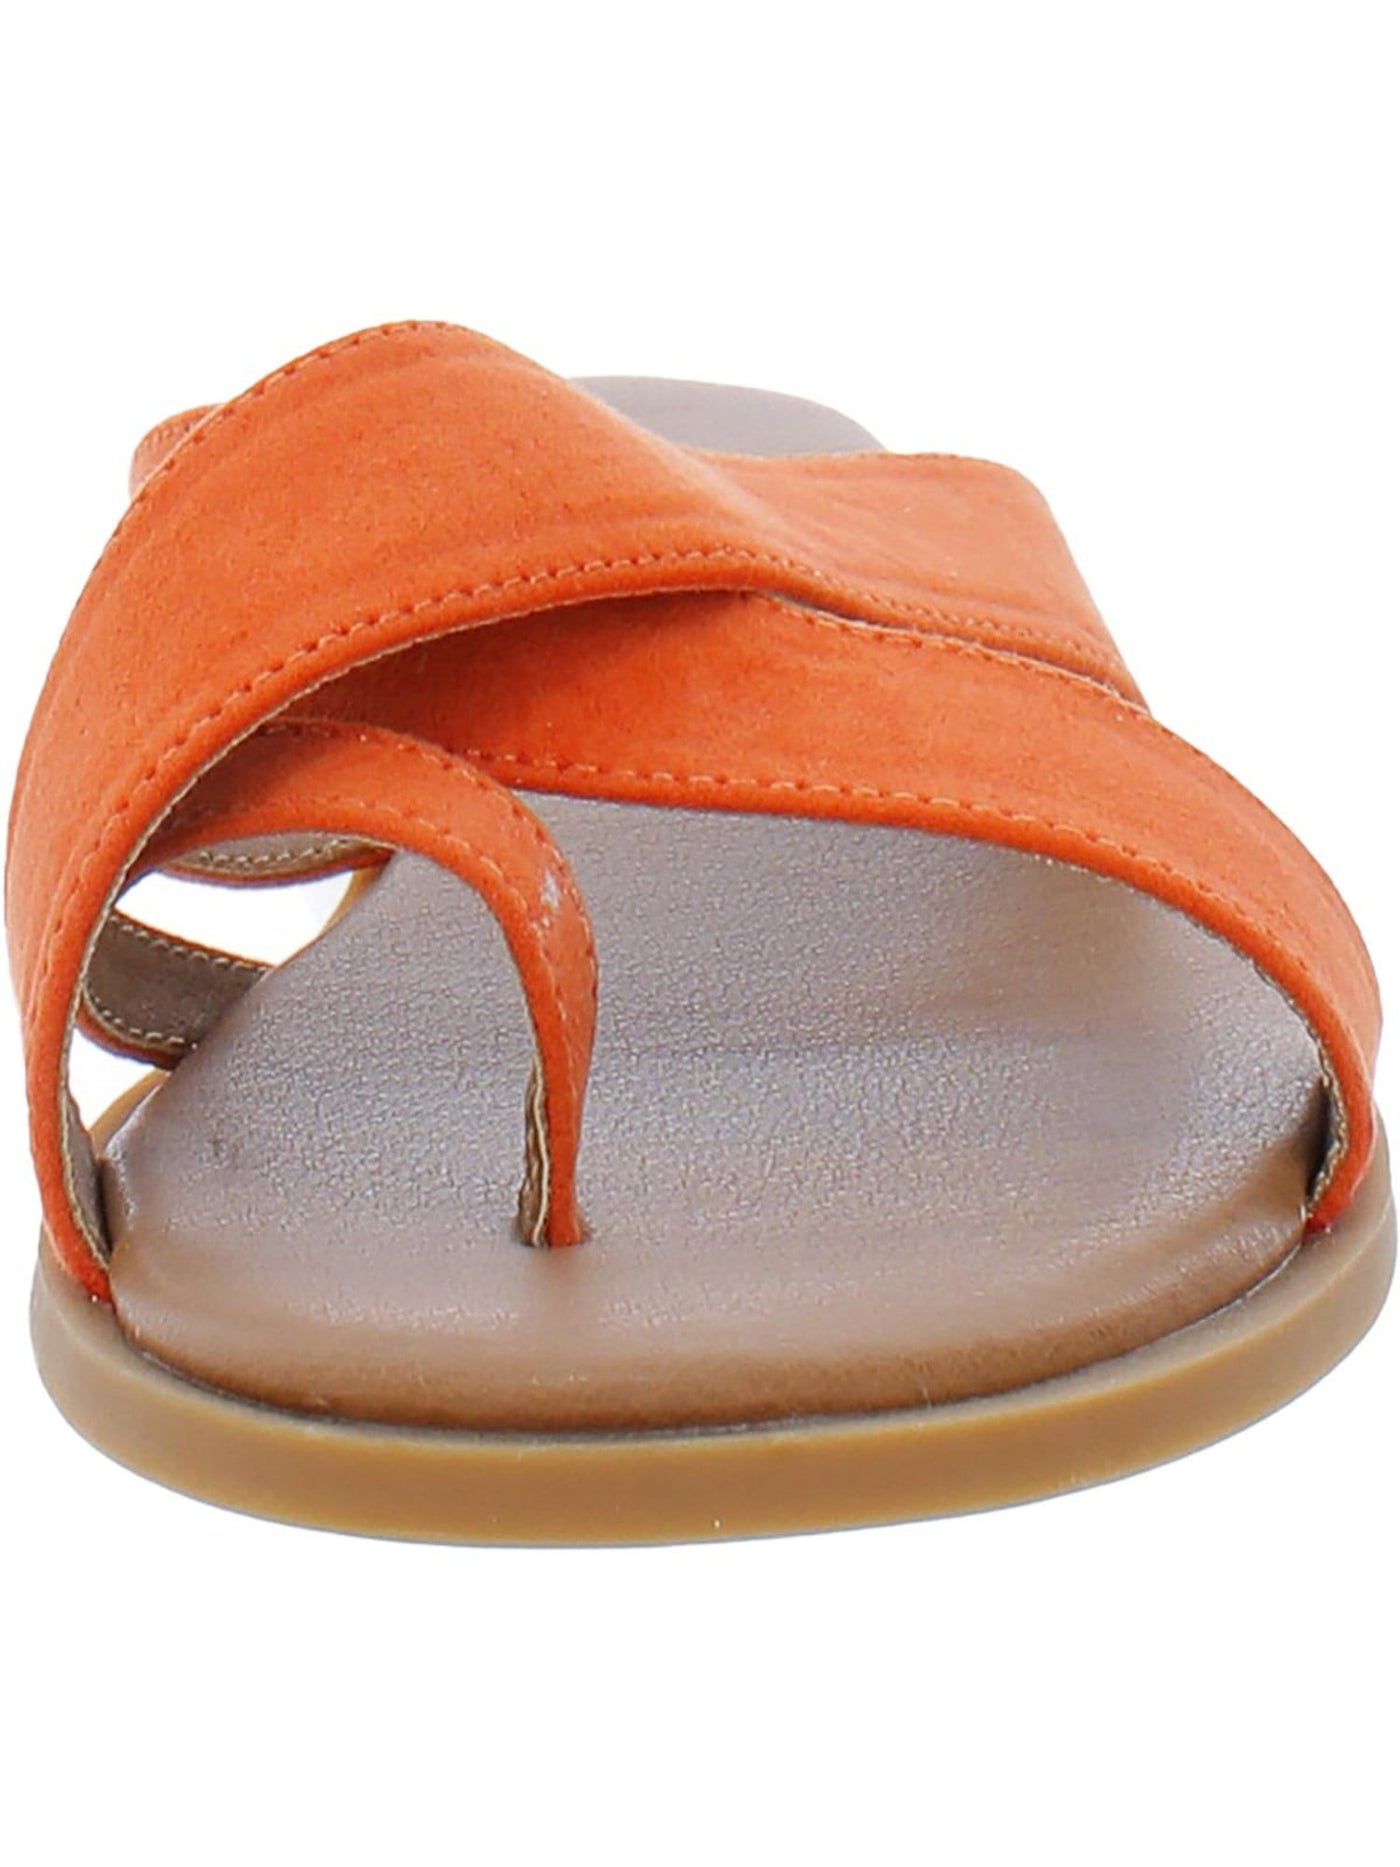 STYLE & COMPANY Womens Orange Cushioned Carolyn Round Toe Slip On Sandals Shoes 7.5 M